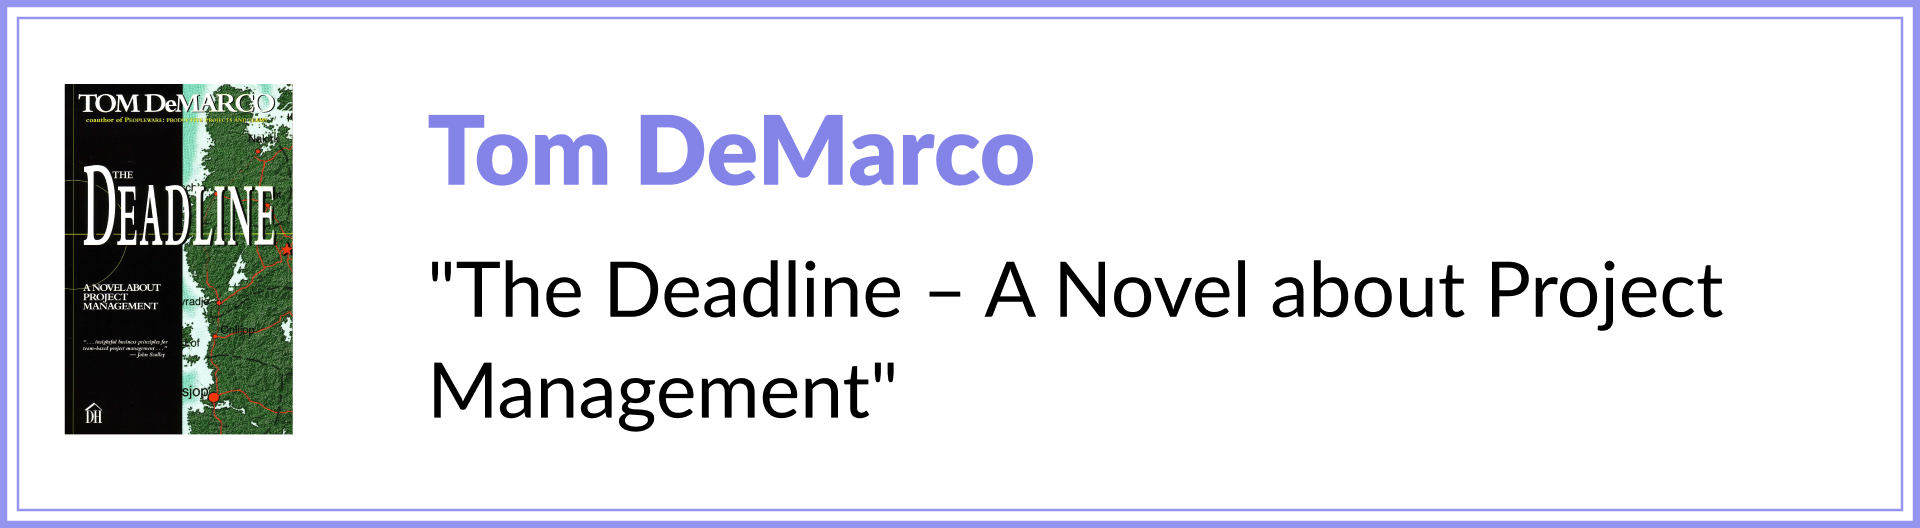 Tom DeMarco “The Deadline: A Novel about Project Management”